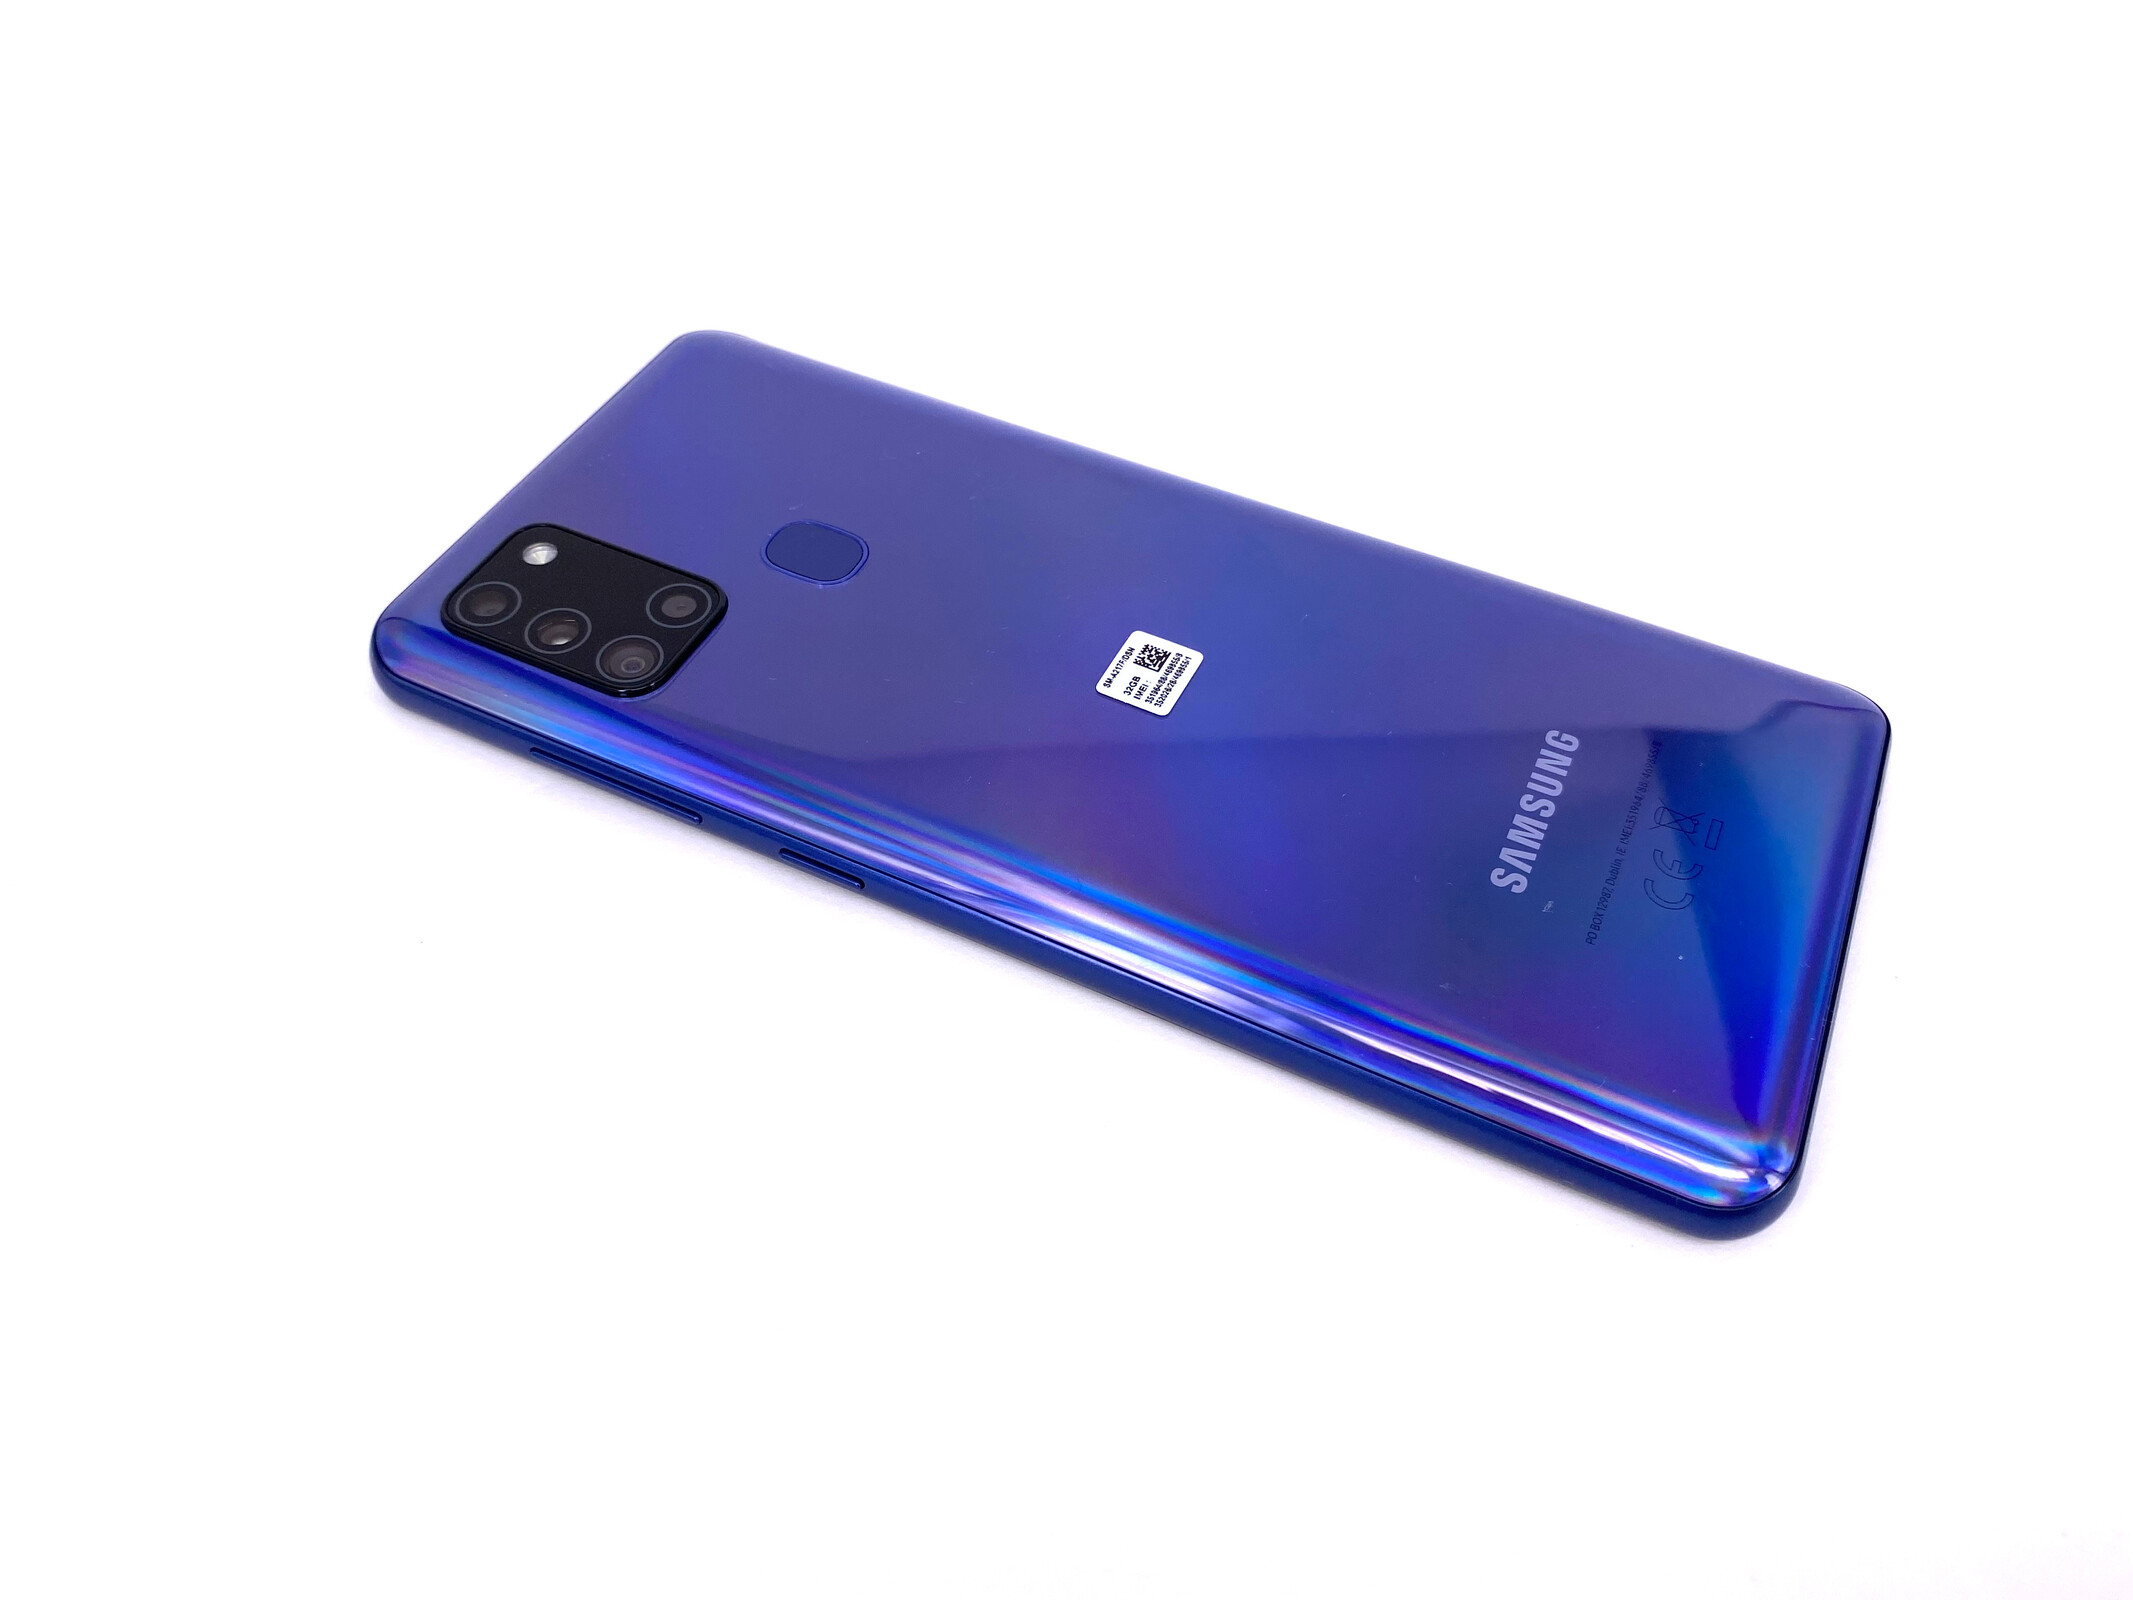 Review Del Smartphone Samsung Galaxy 1s Quad Camera En El Barato Notebookcheck Org